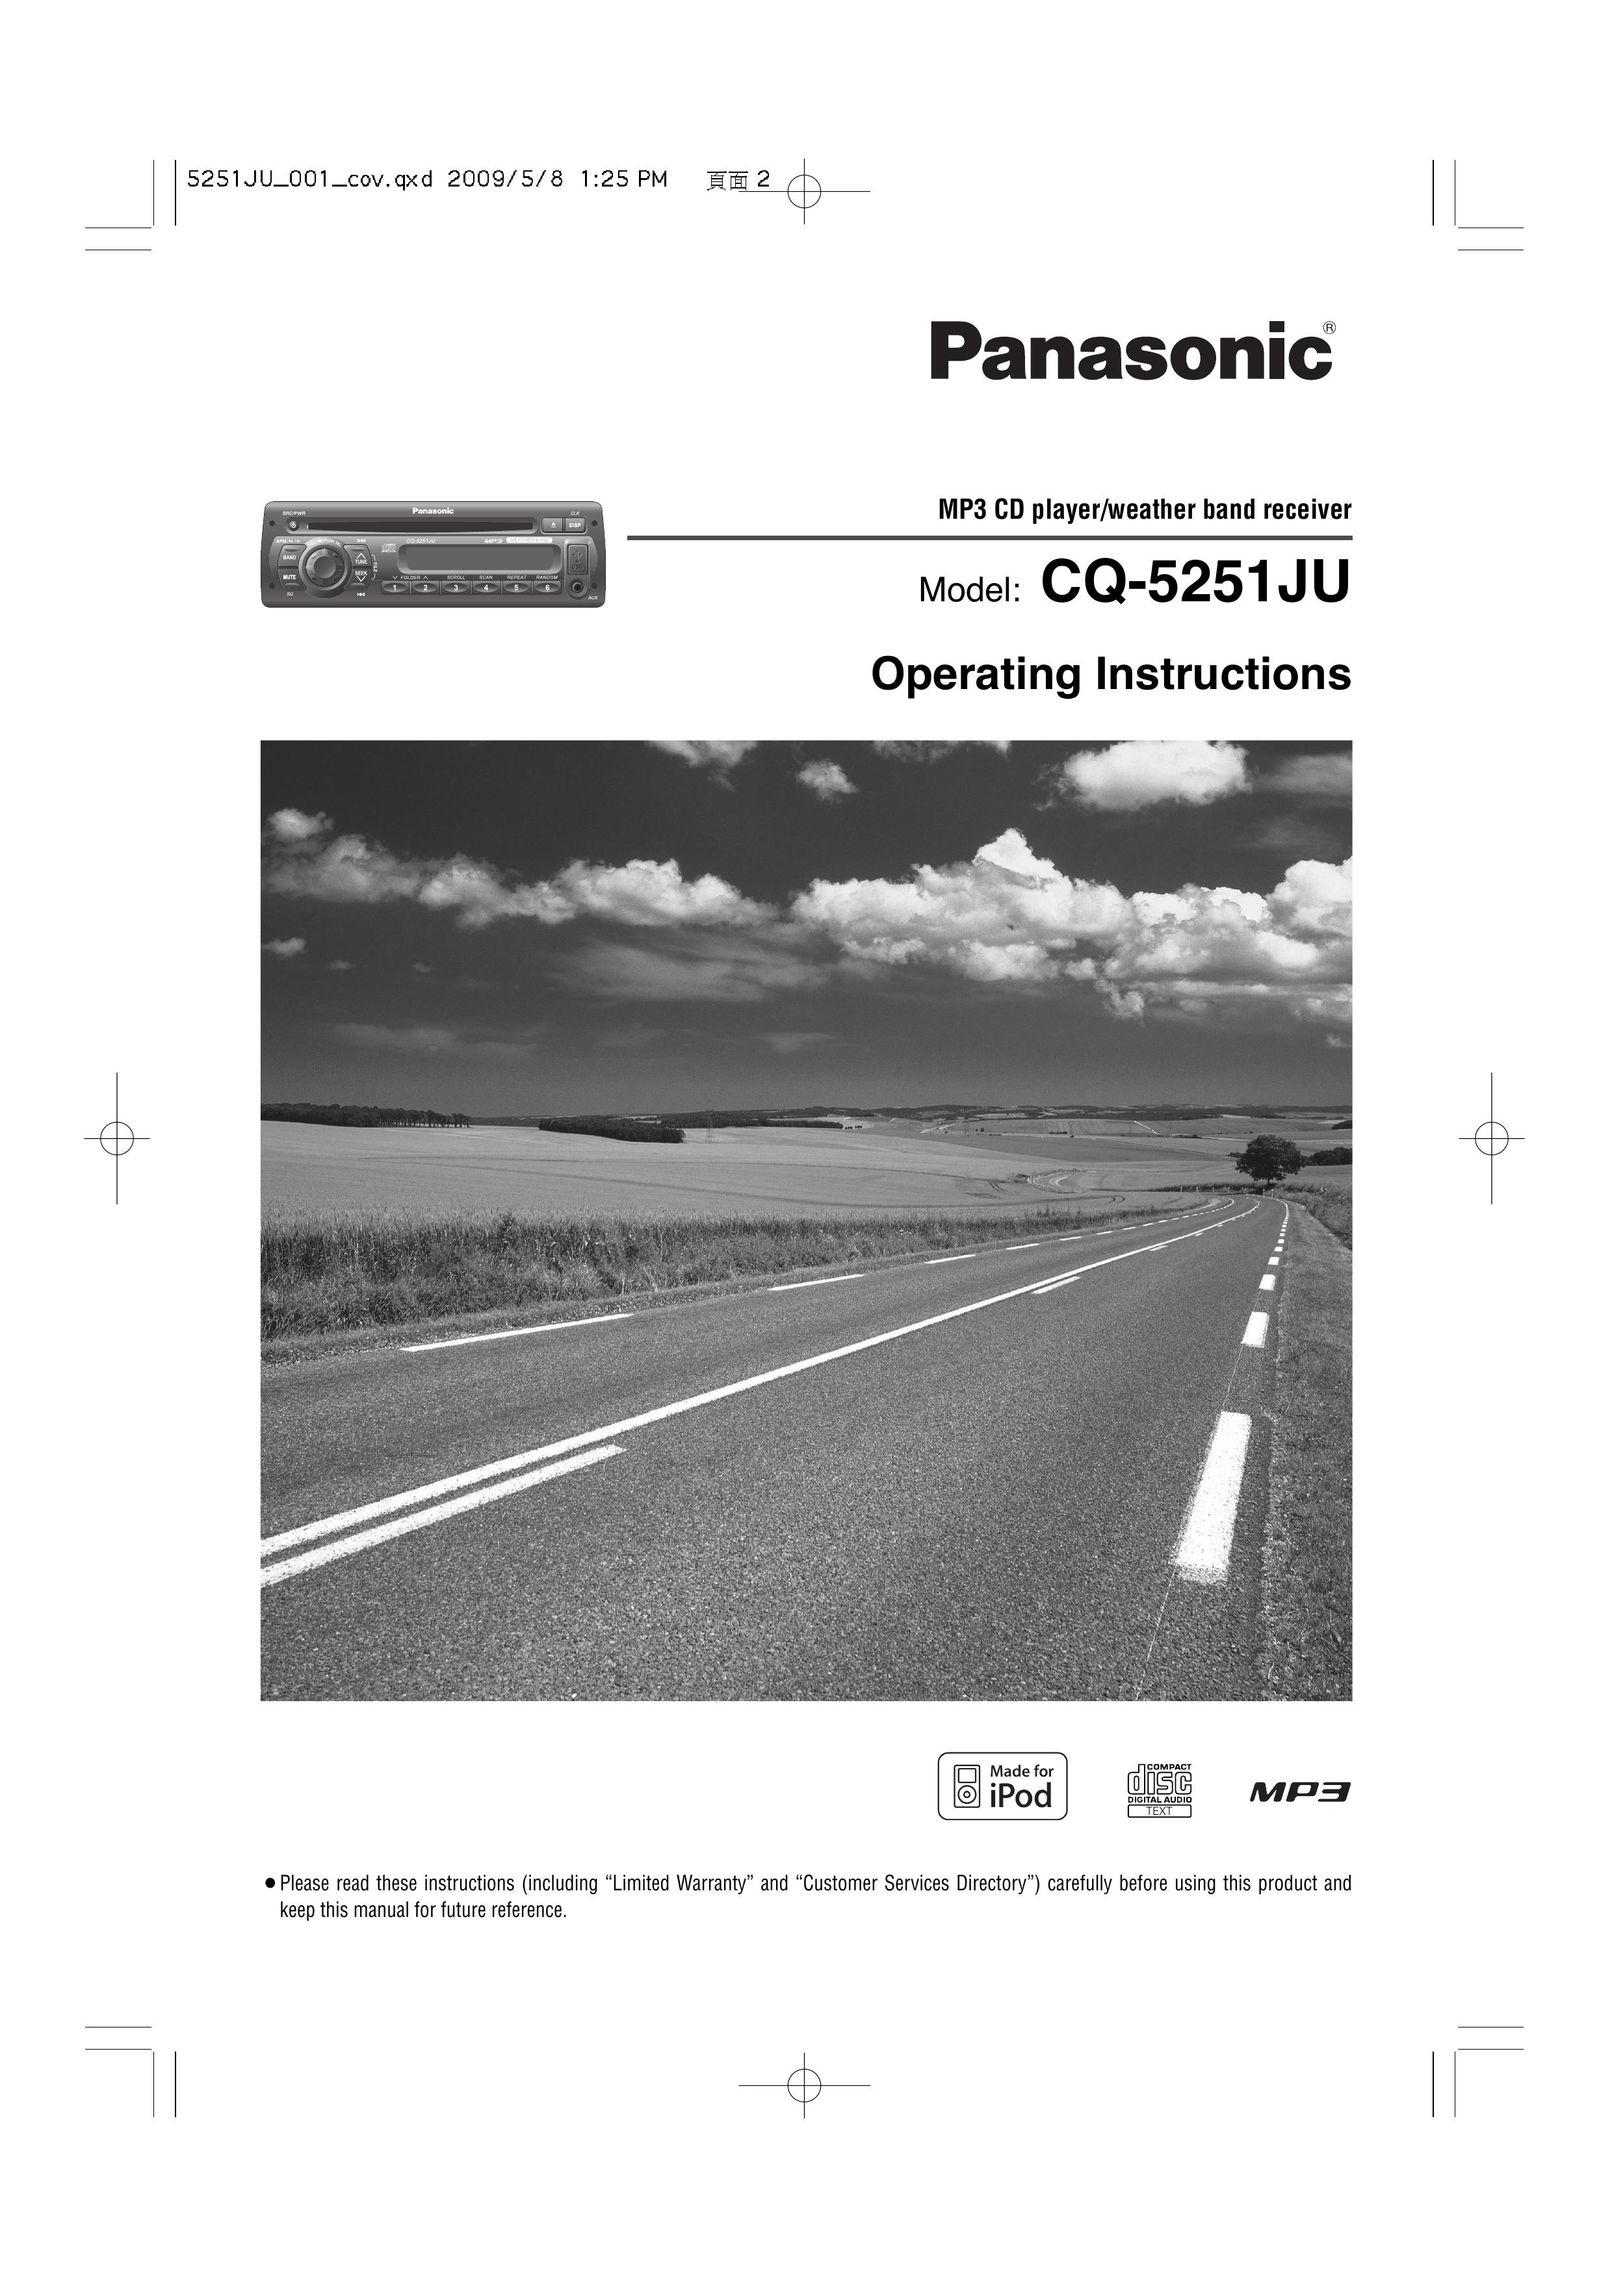 Panasonic CQ-5251JU Car Stereo System User Manual